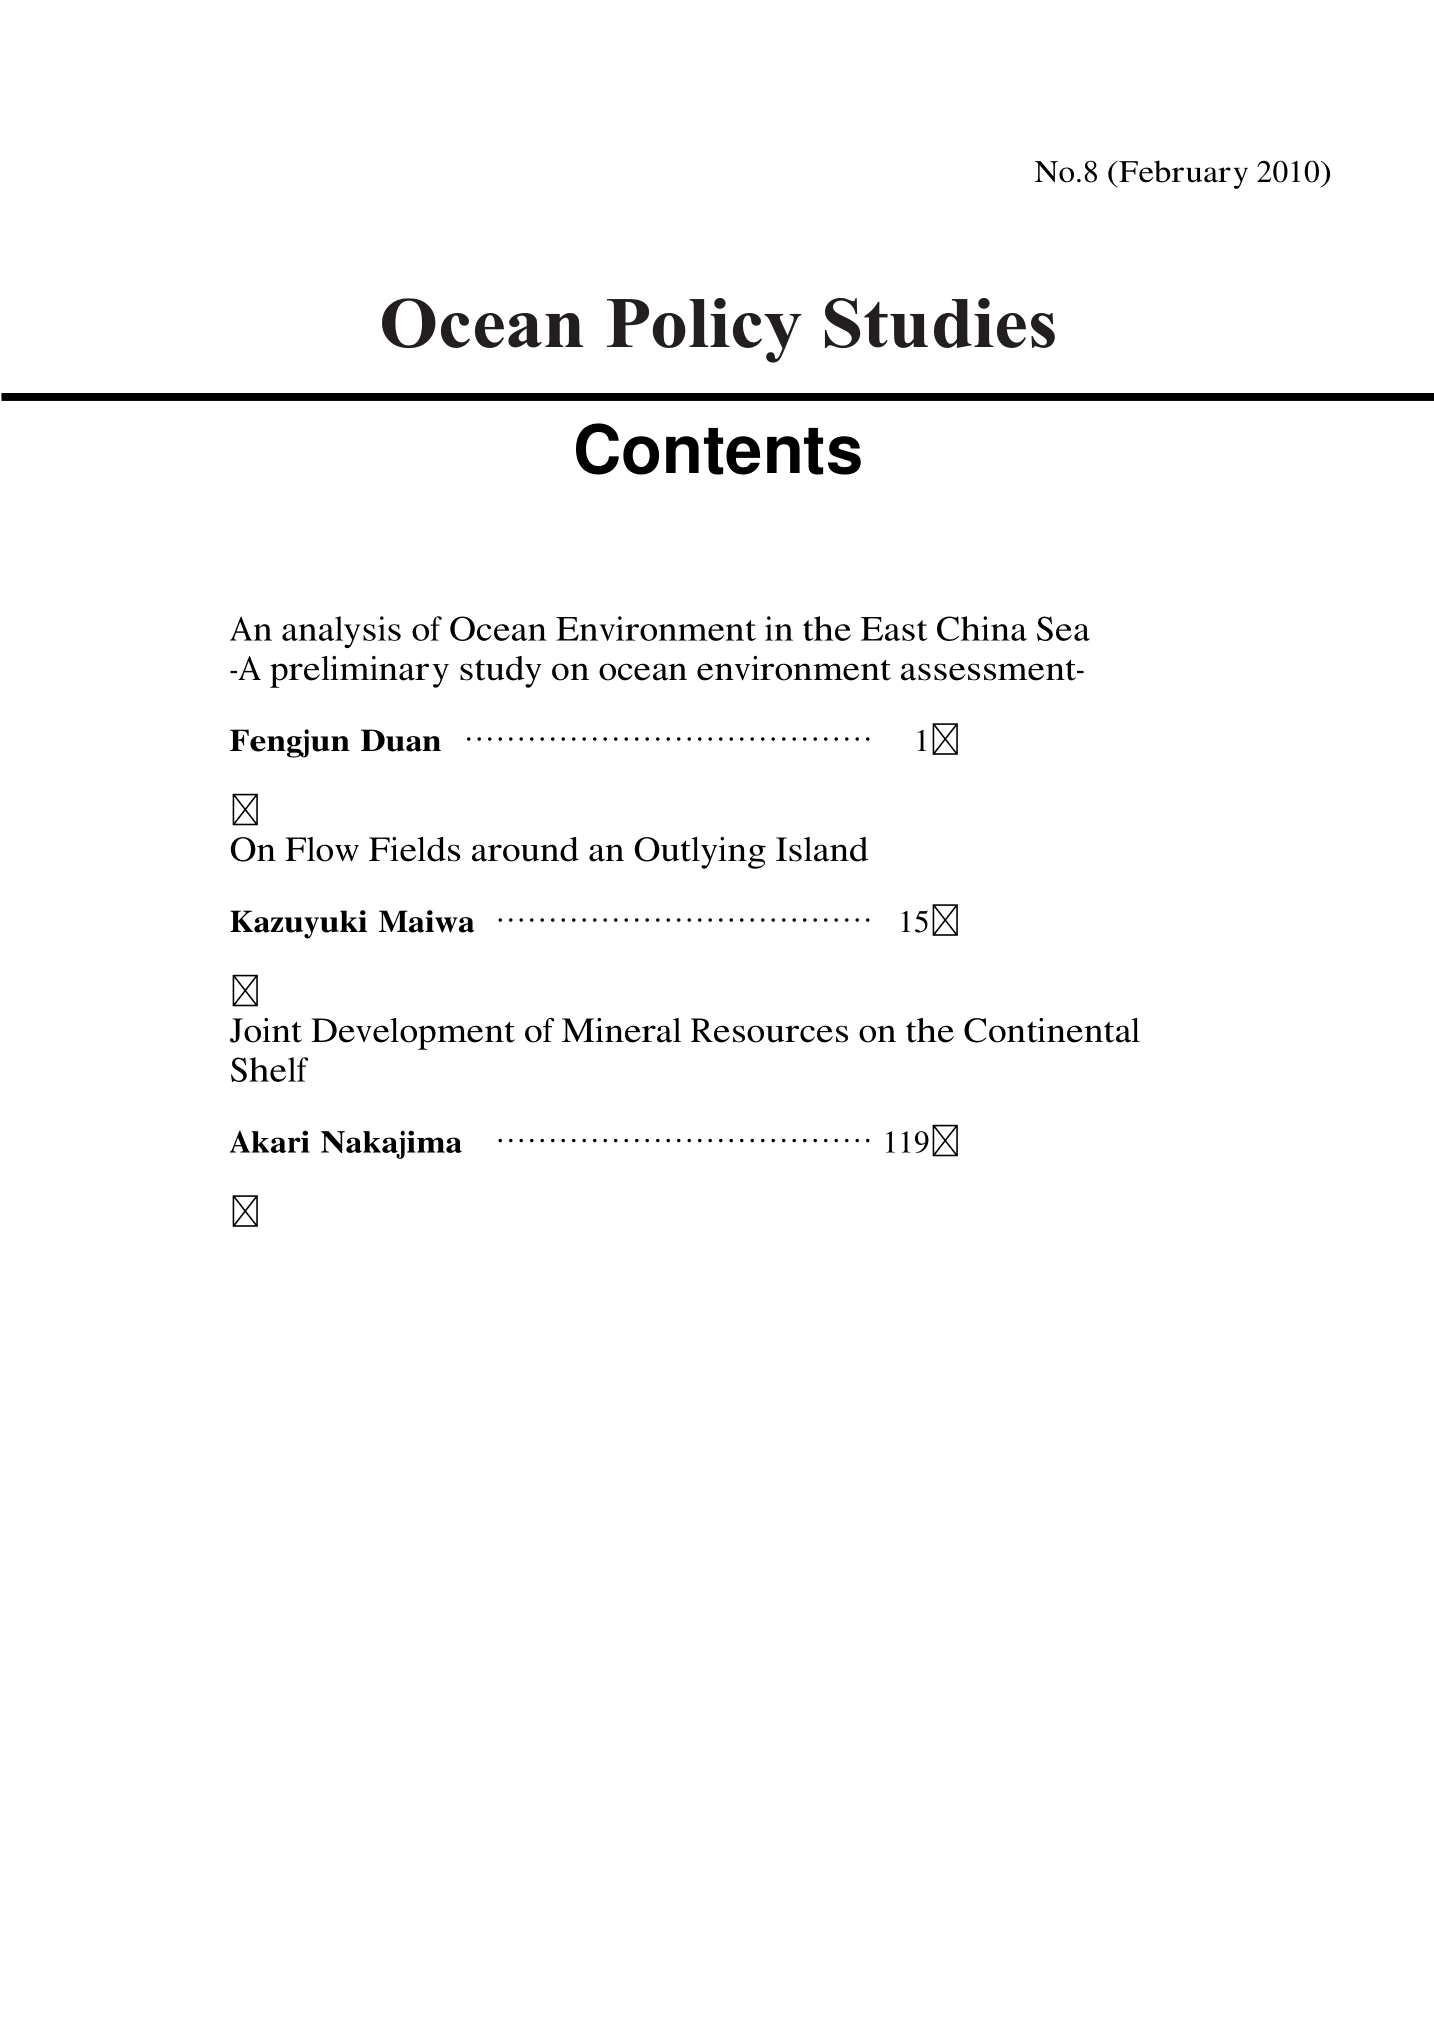 Ocean Policy Studies No.8